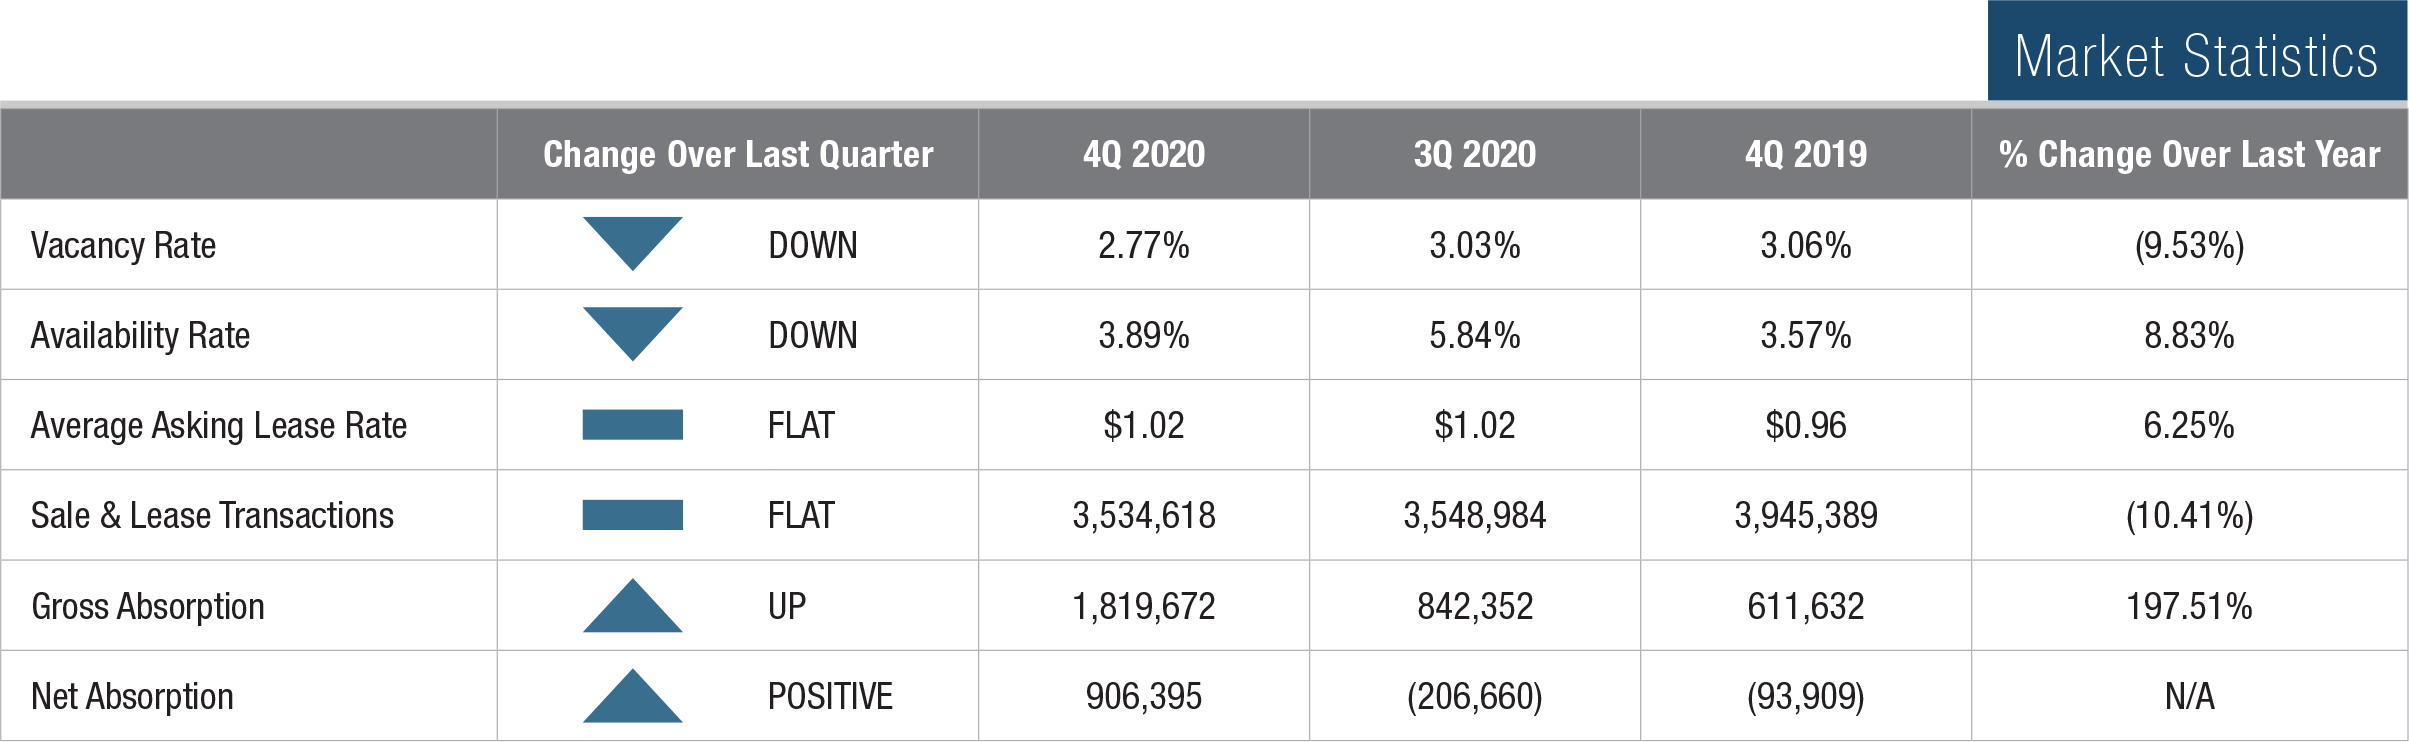 4Q 2020 Market Statistics